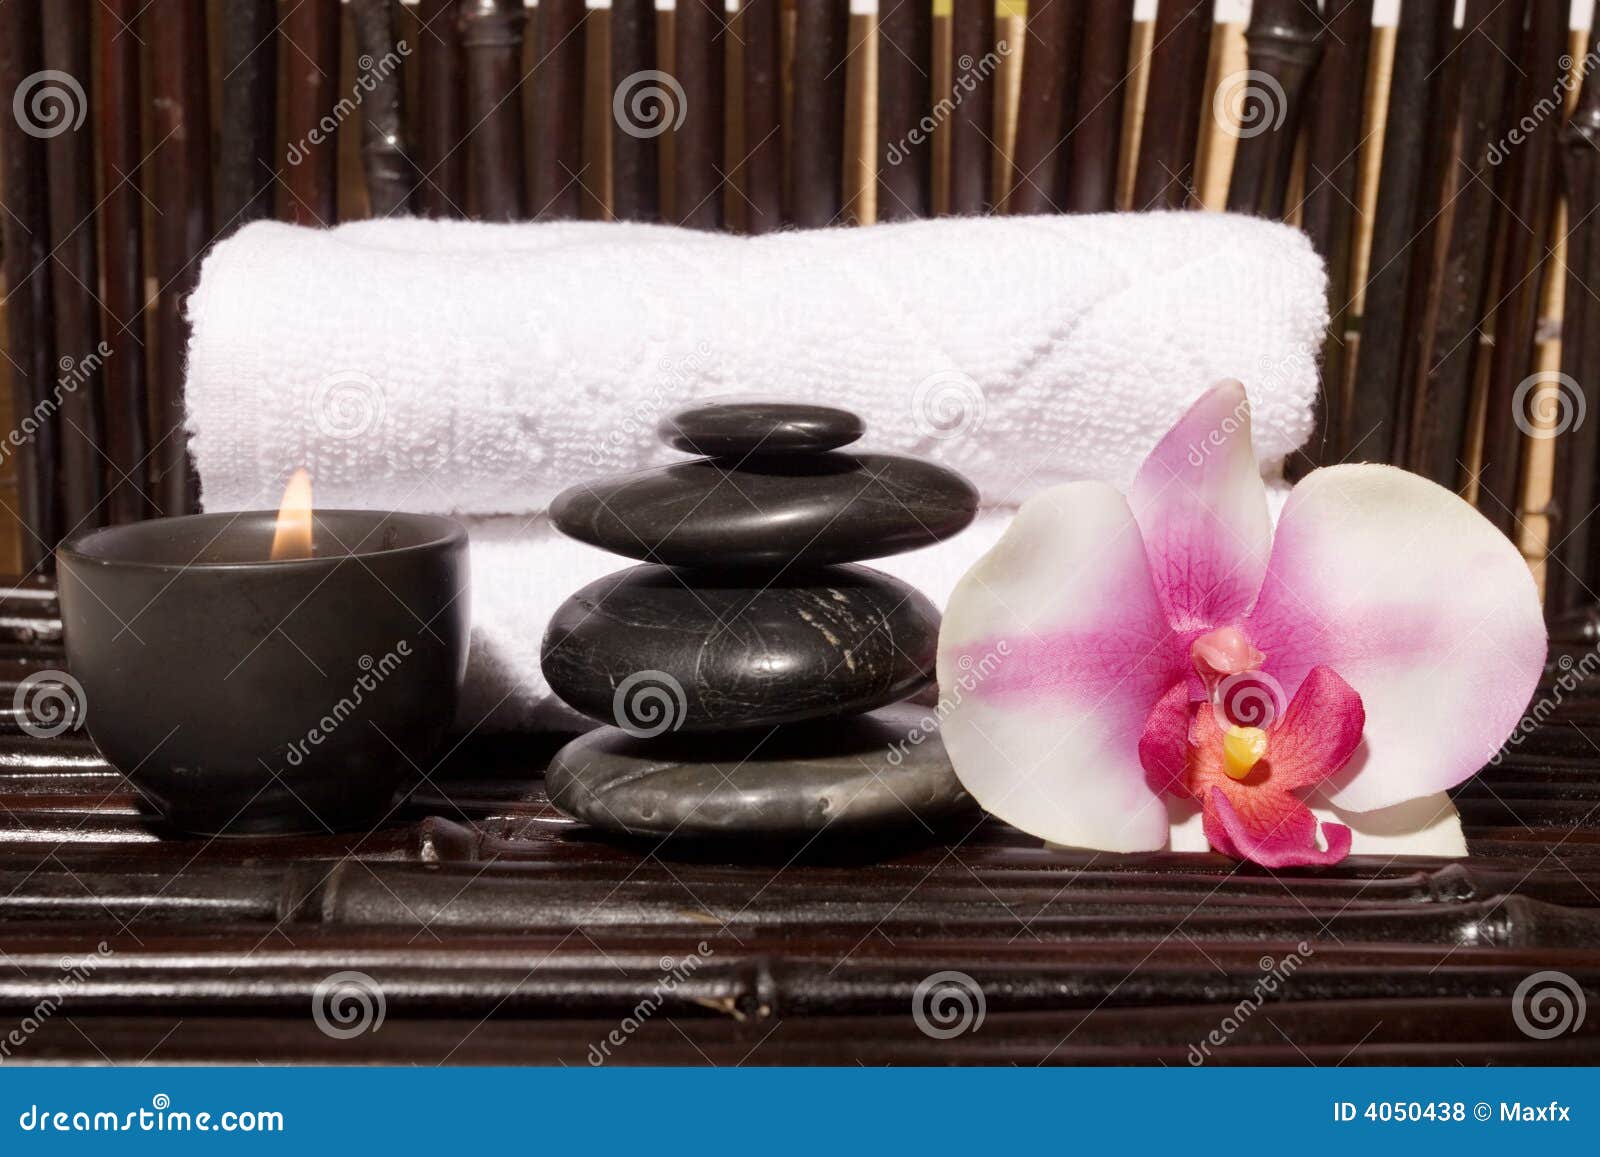 bodycare massage items